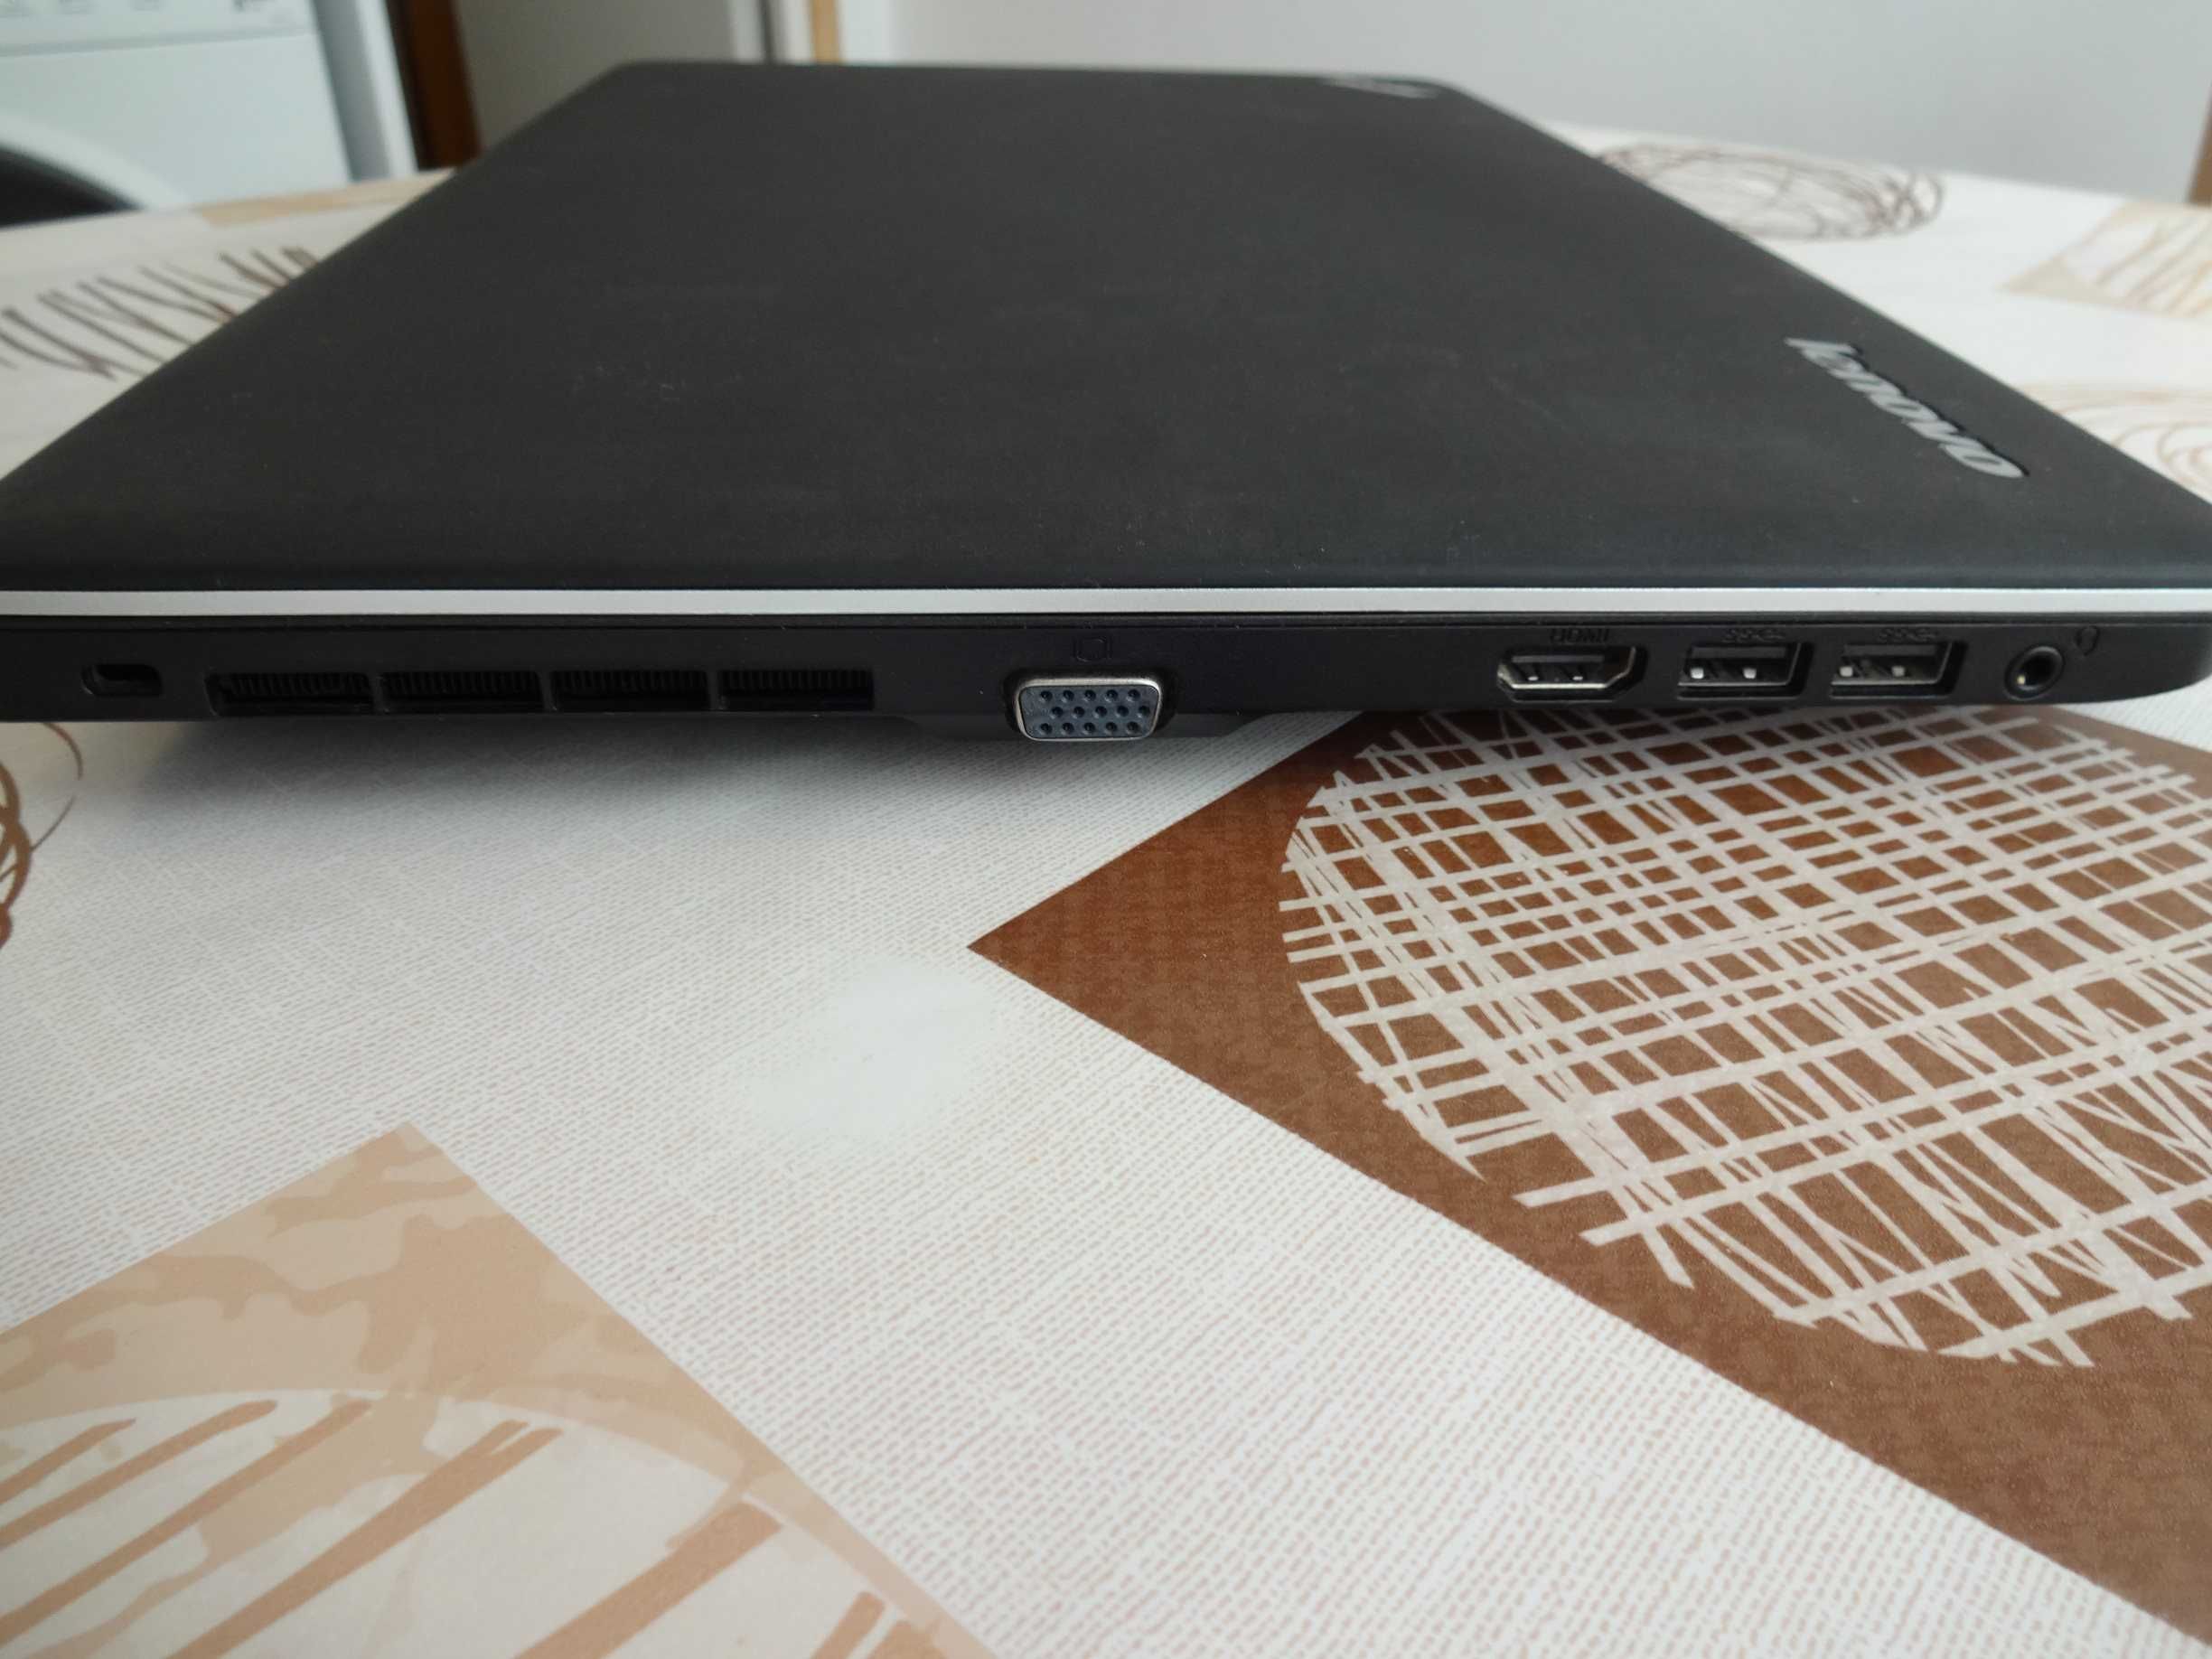 Лаптоп Lenovo ThinkPad E540 15.6" i5-4200M 2.50GHz/RAM8GB/HDD500GB